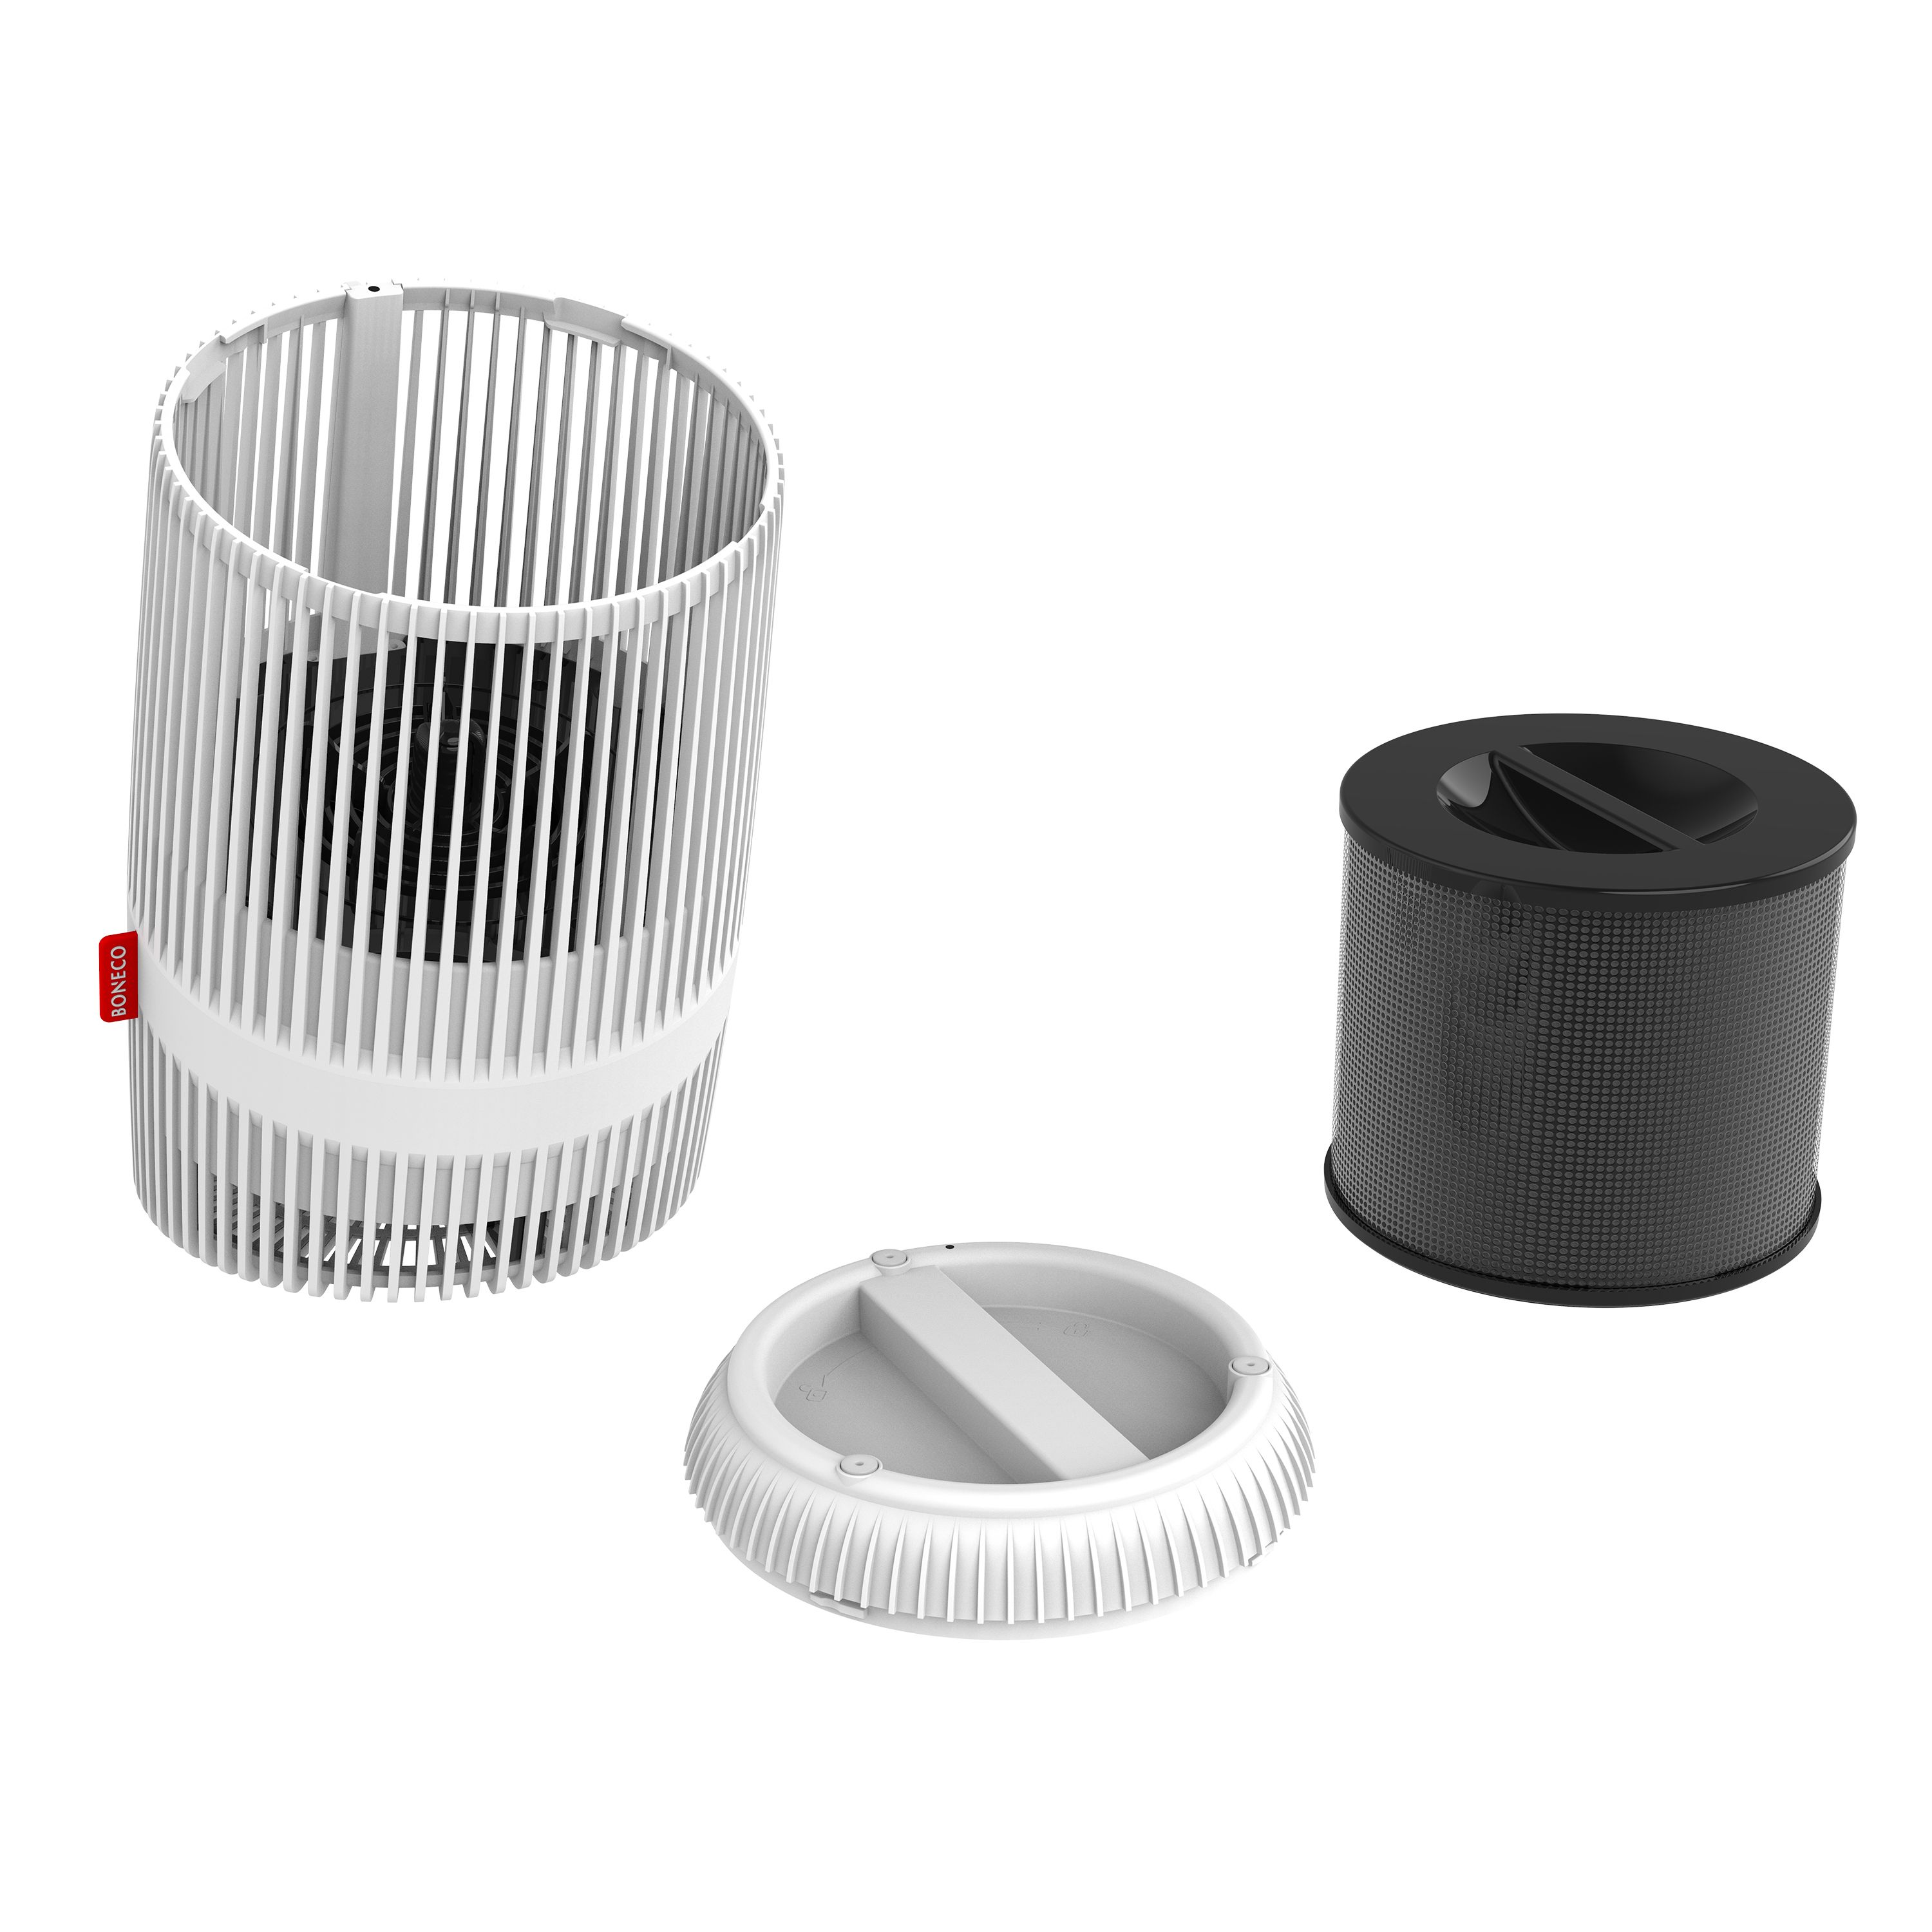 Boneco P230 Filter 3-speed Air purifier White